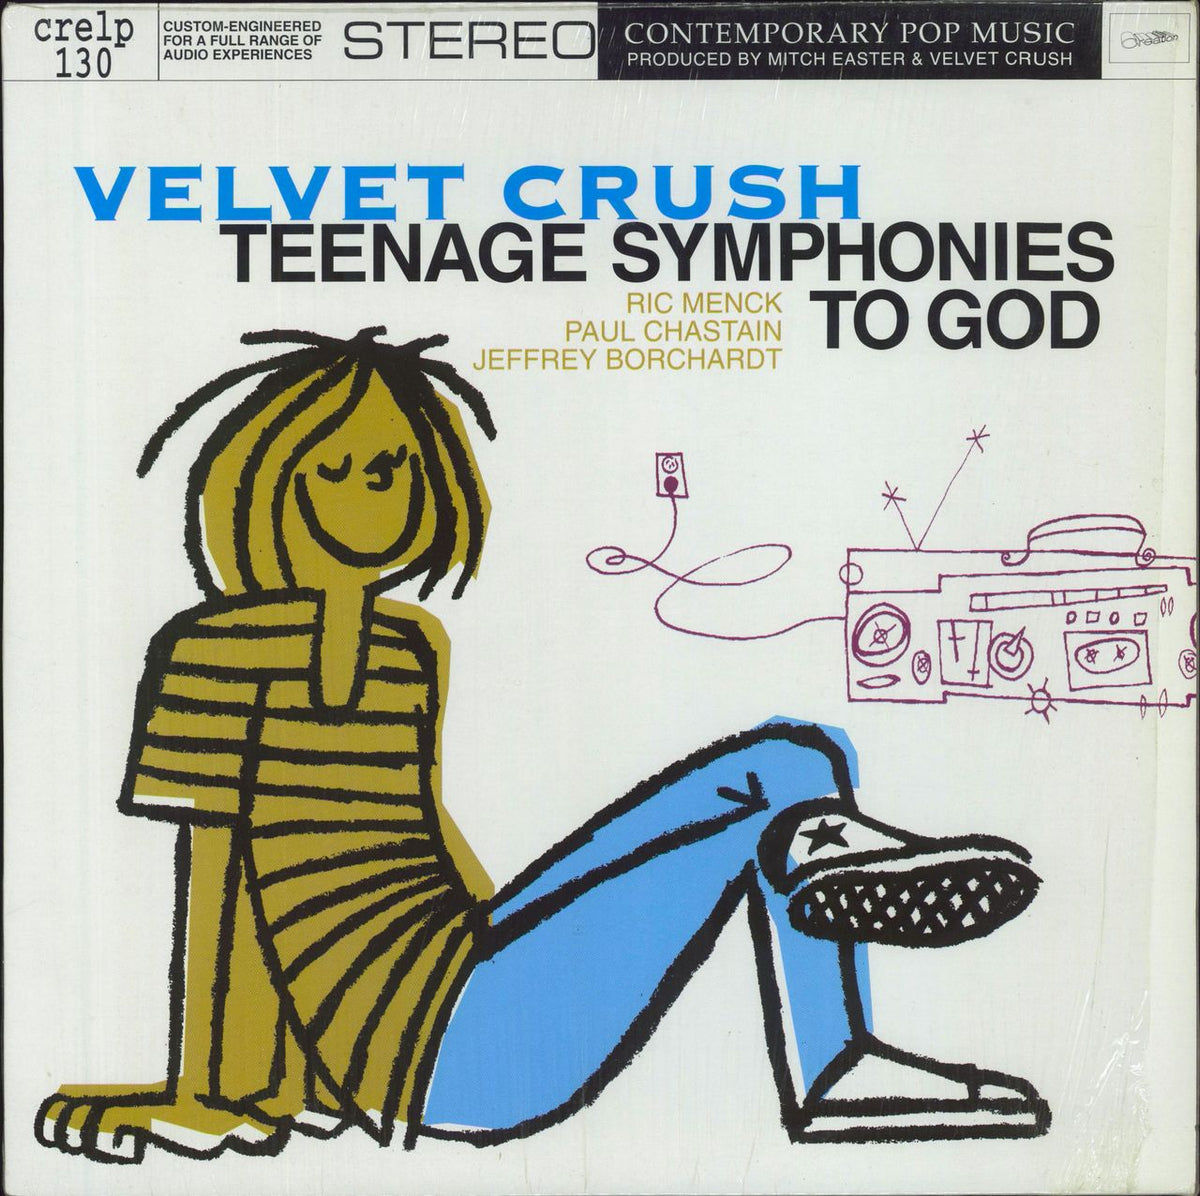 Velvet Crush Teenage Symphonies To God - EX UK Vinyl LP 